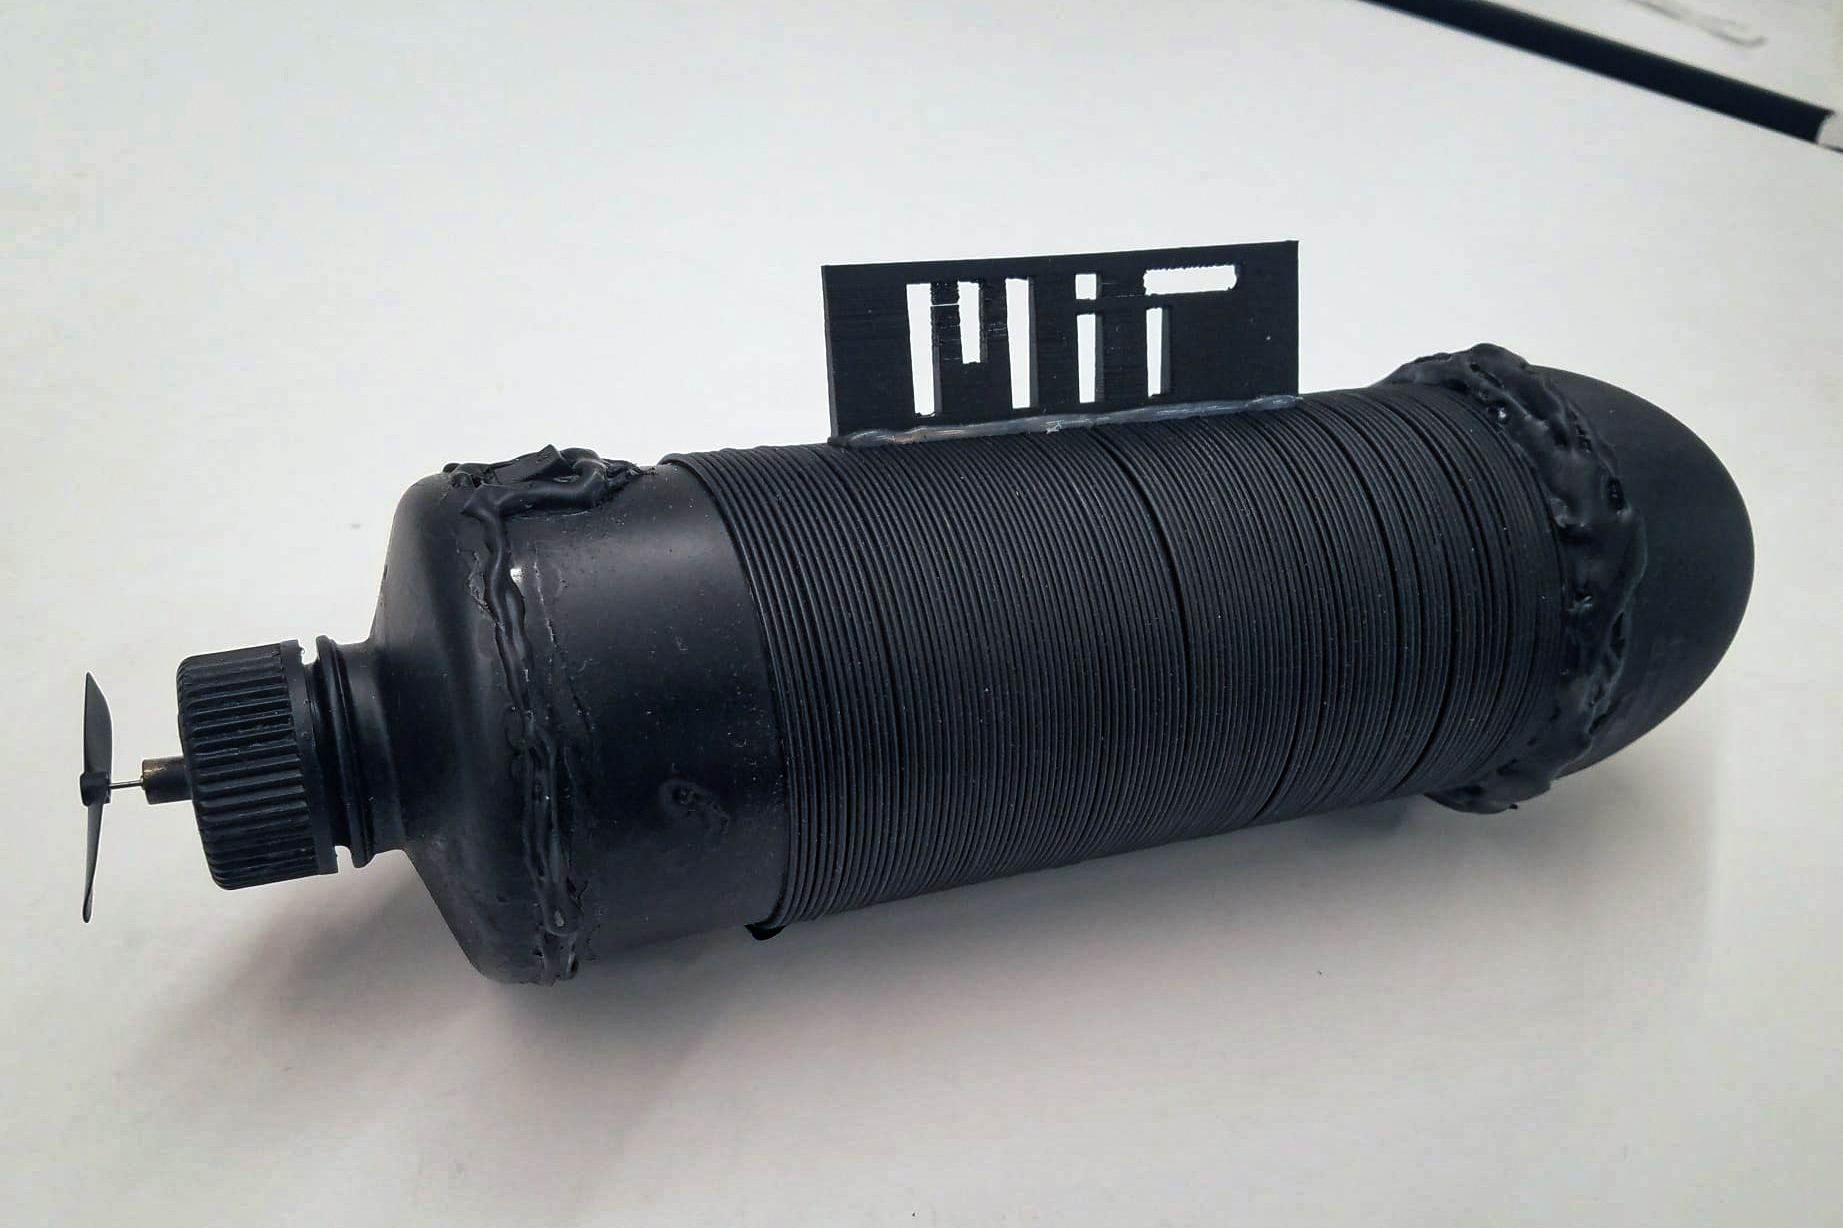 MIT engineers produce the world’s longest flexible fiber battery